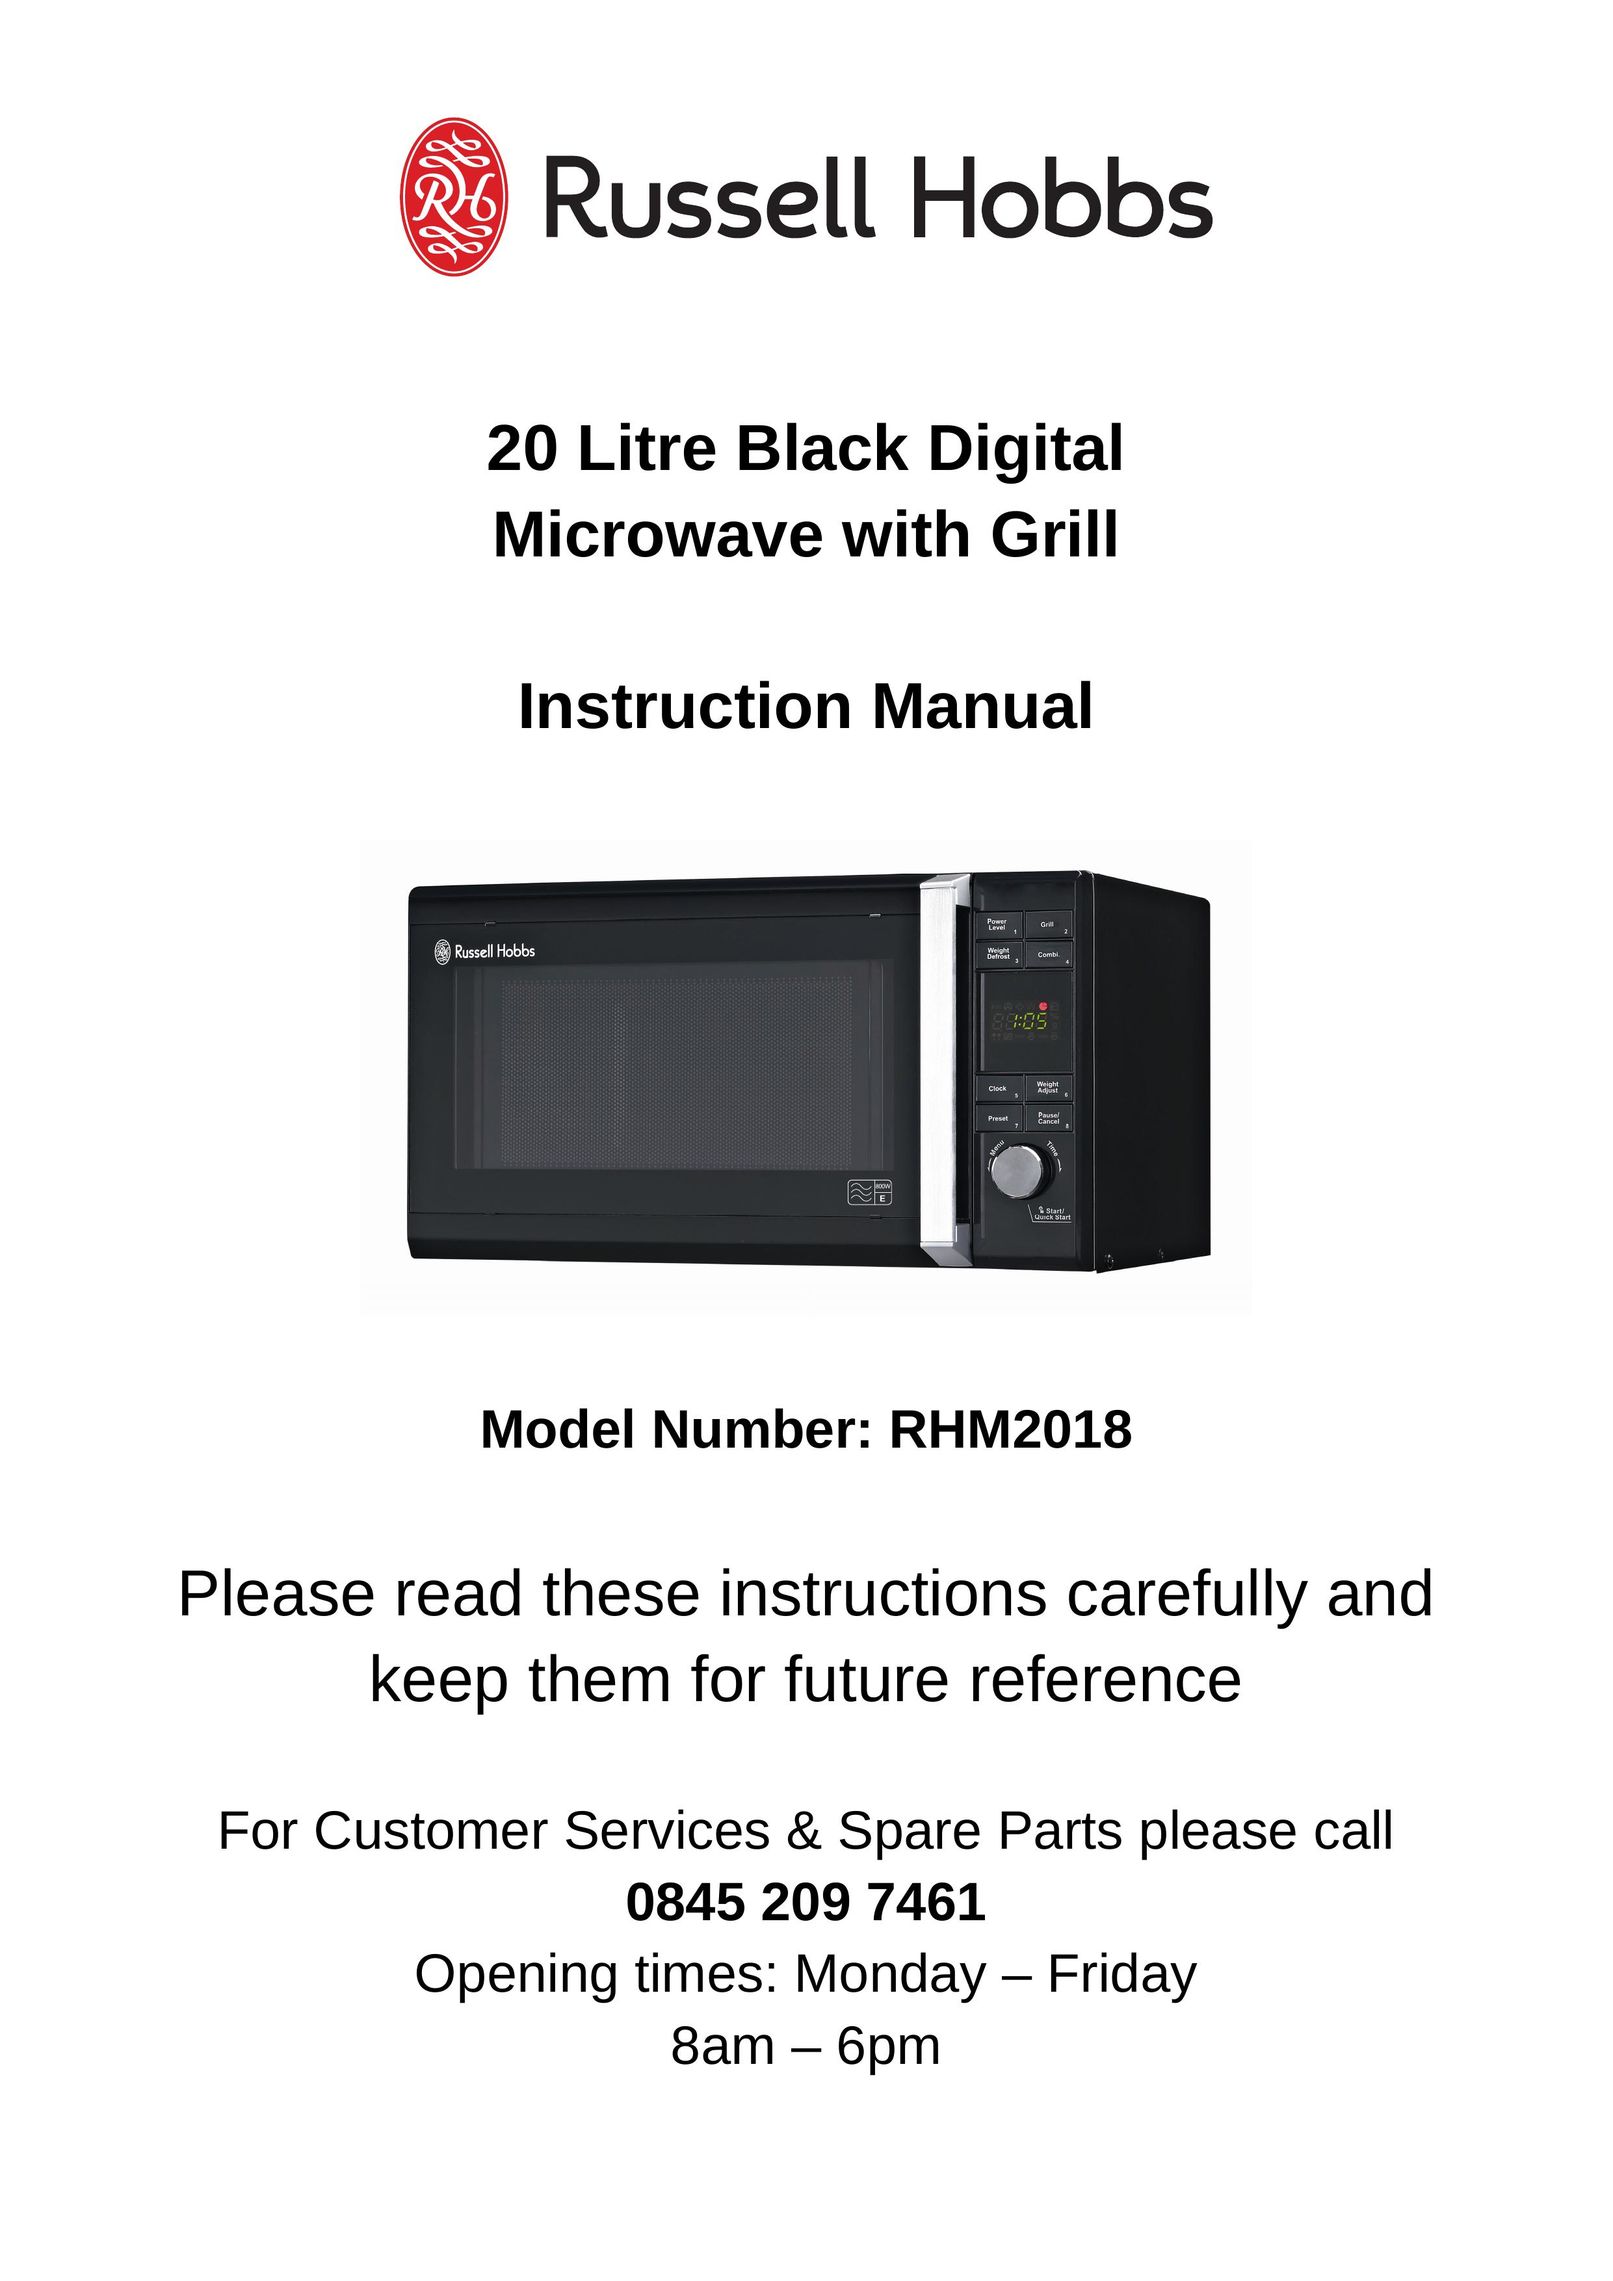 Russell Hobbs RHM2018 Microwave Oven User Manual